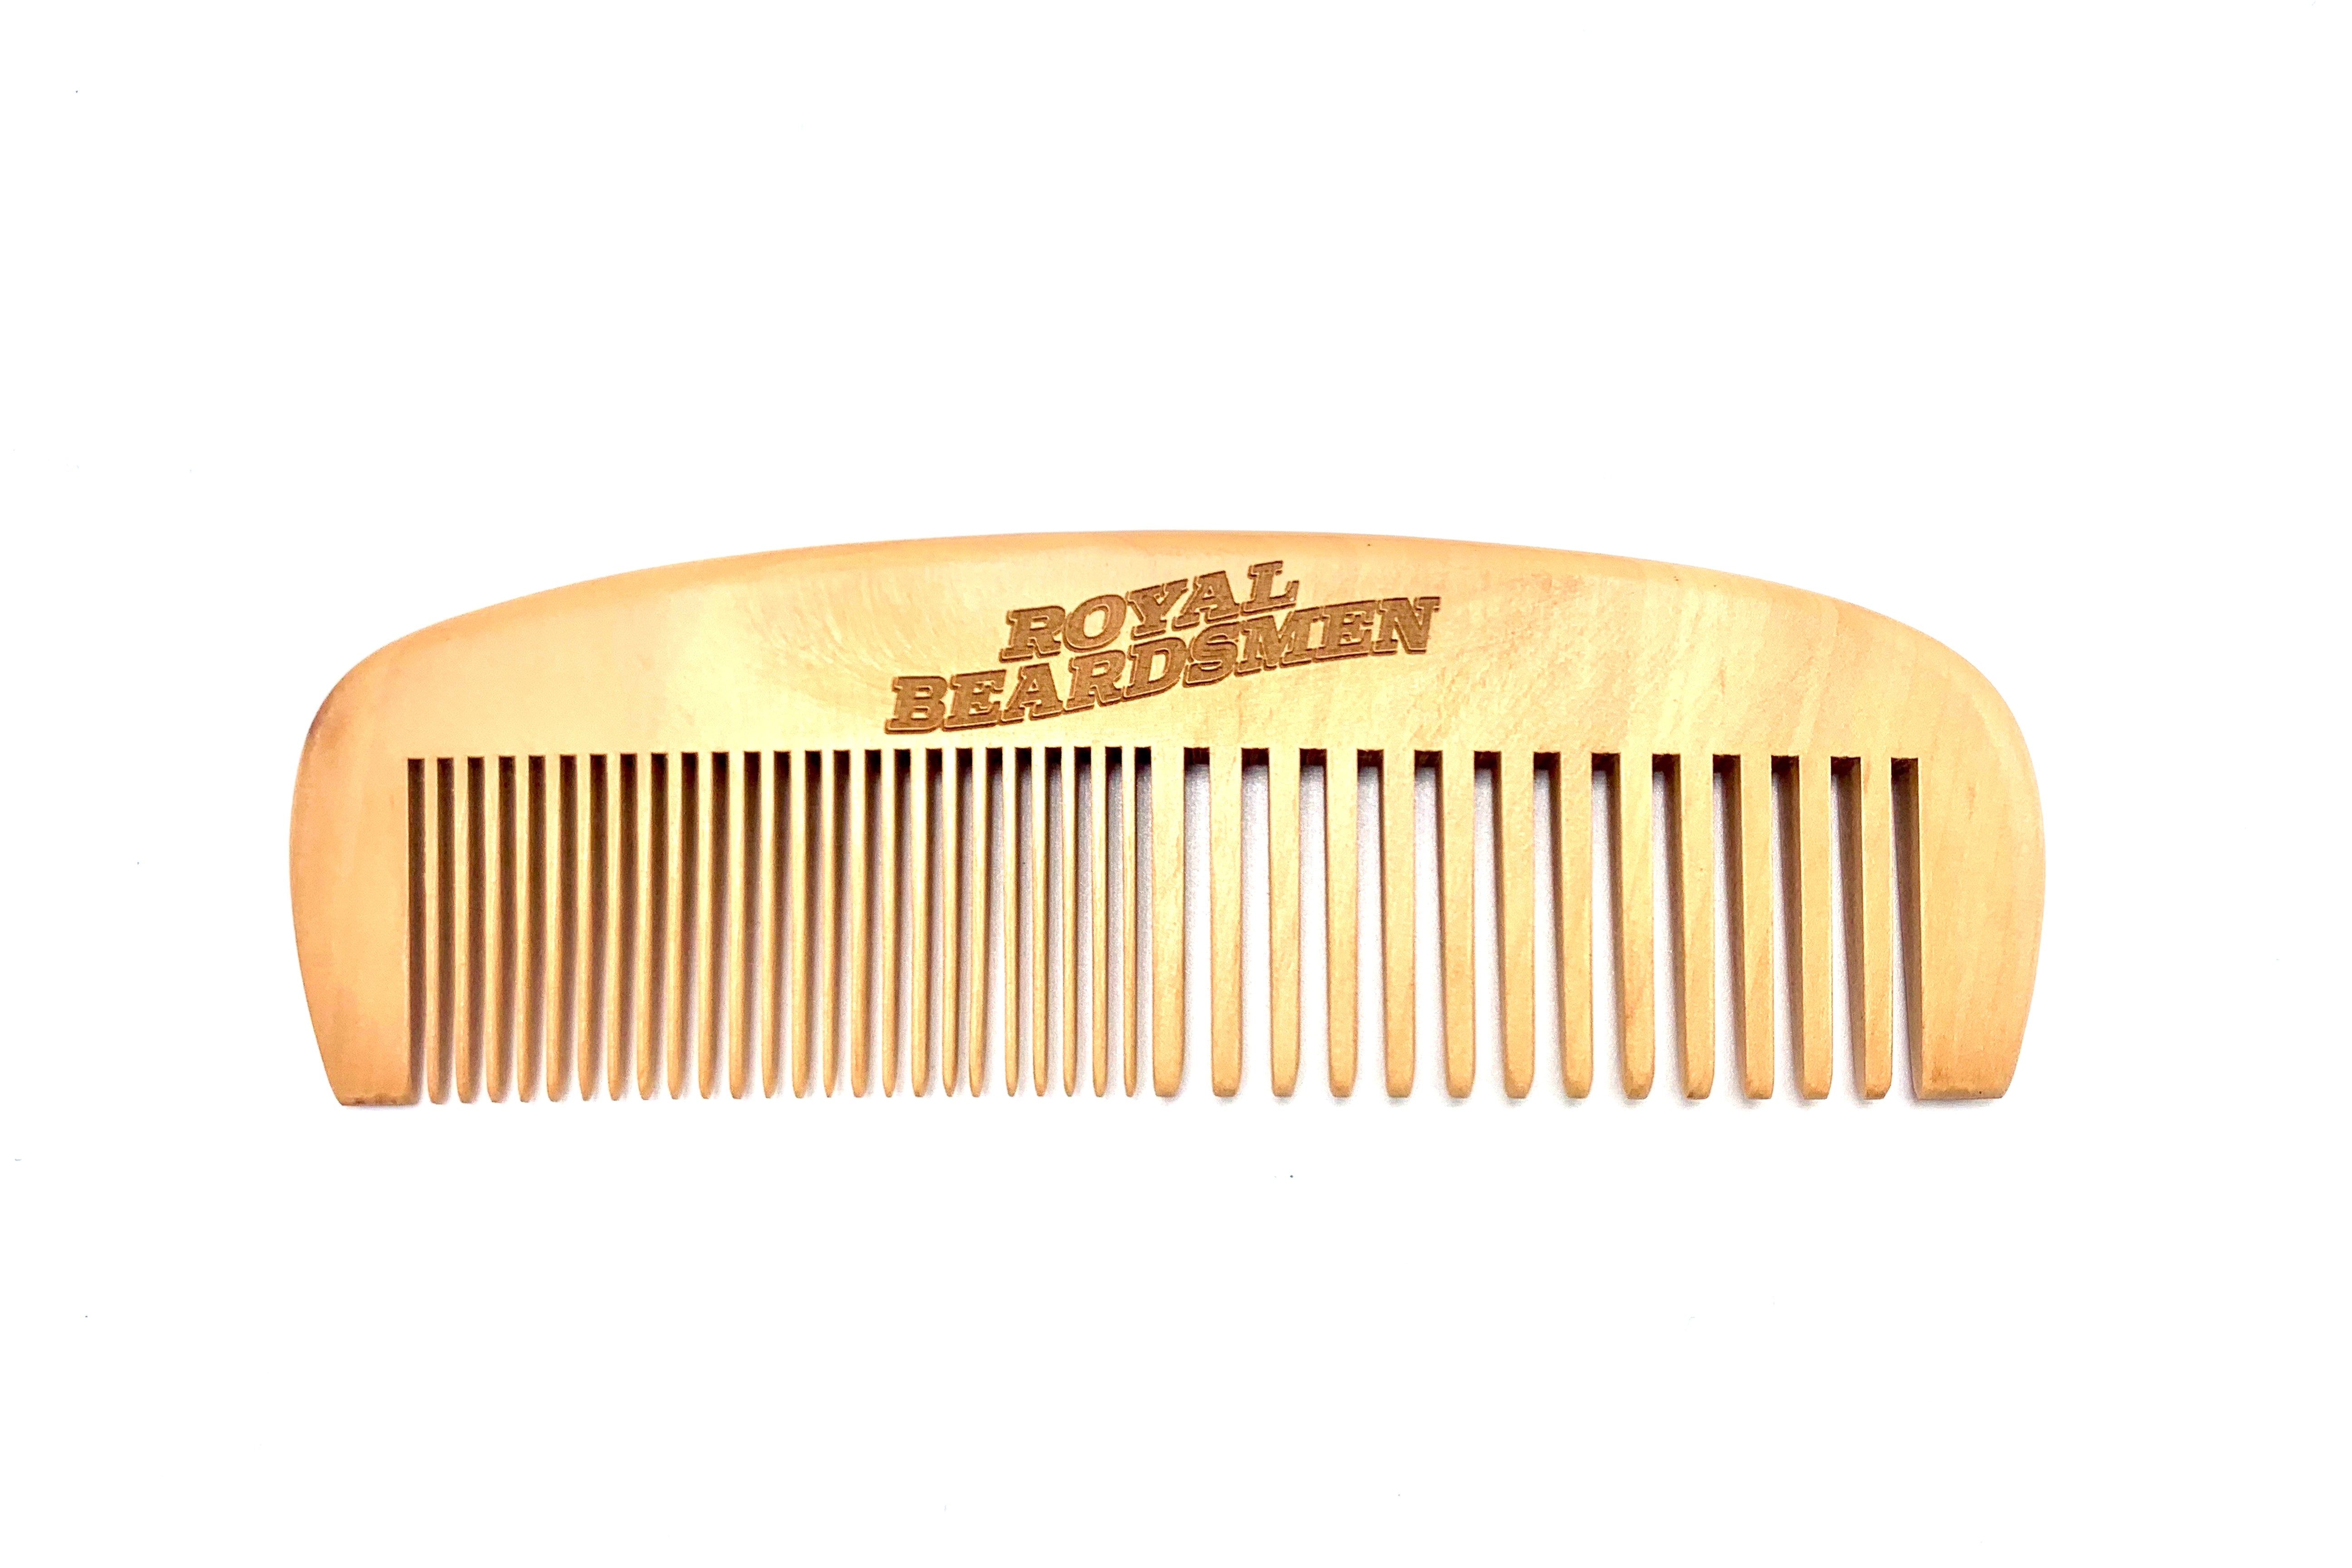 Dual action wooden beard comb